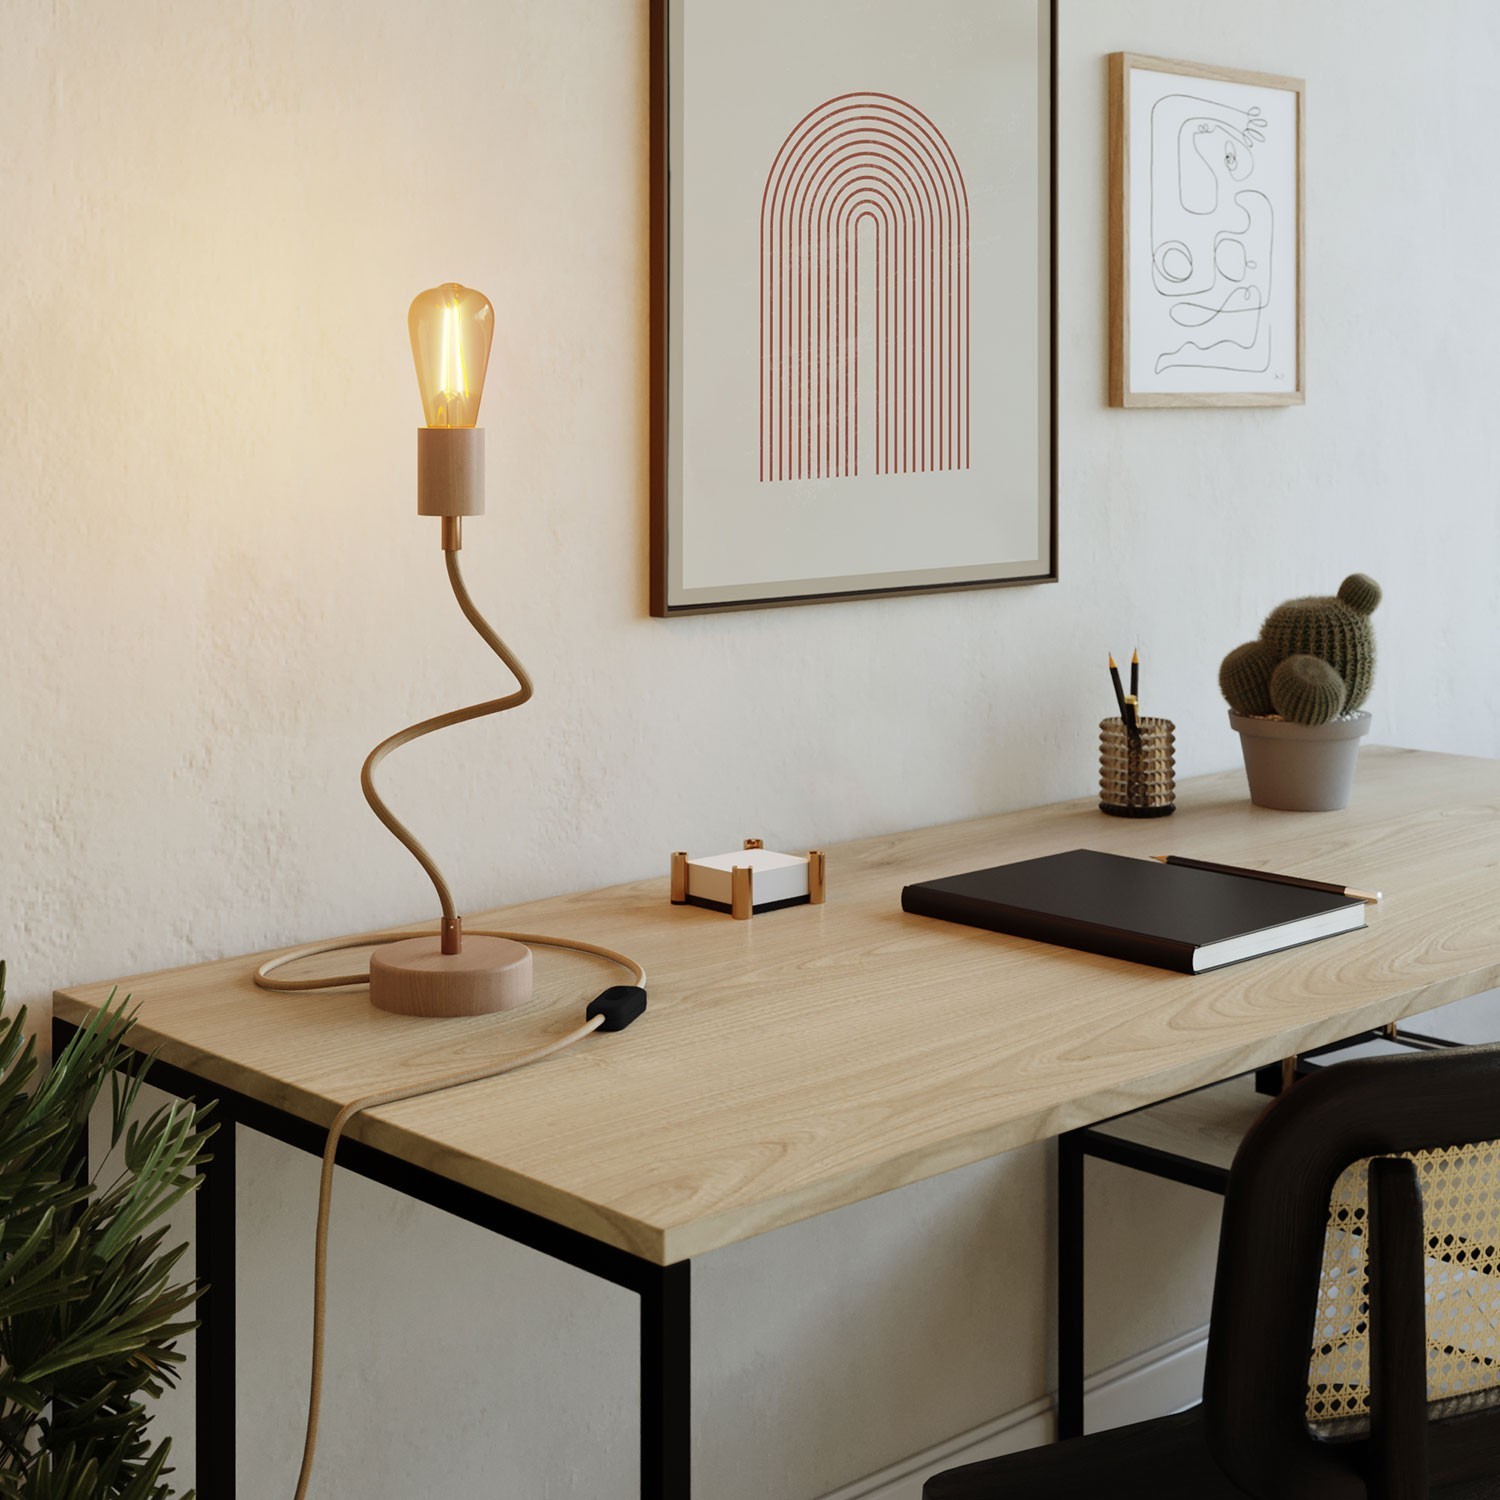 Wood adjustable table lamp with diffused lighting - Table Flex Wood